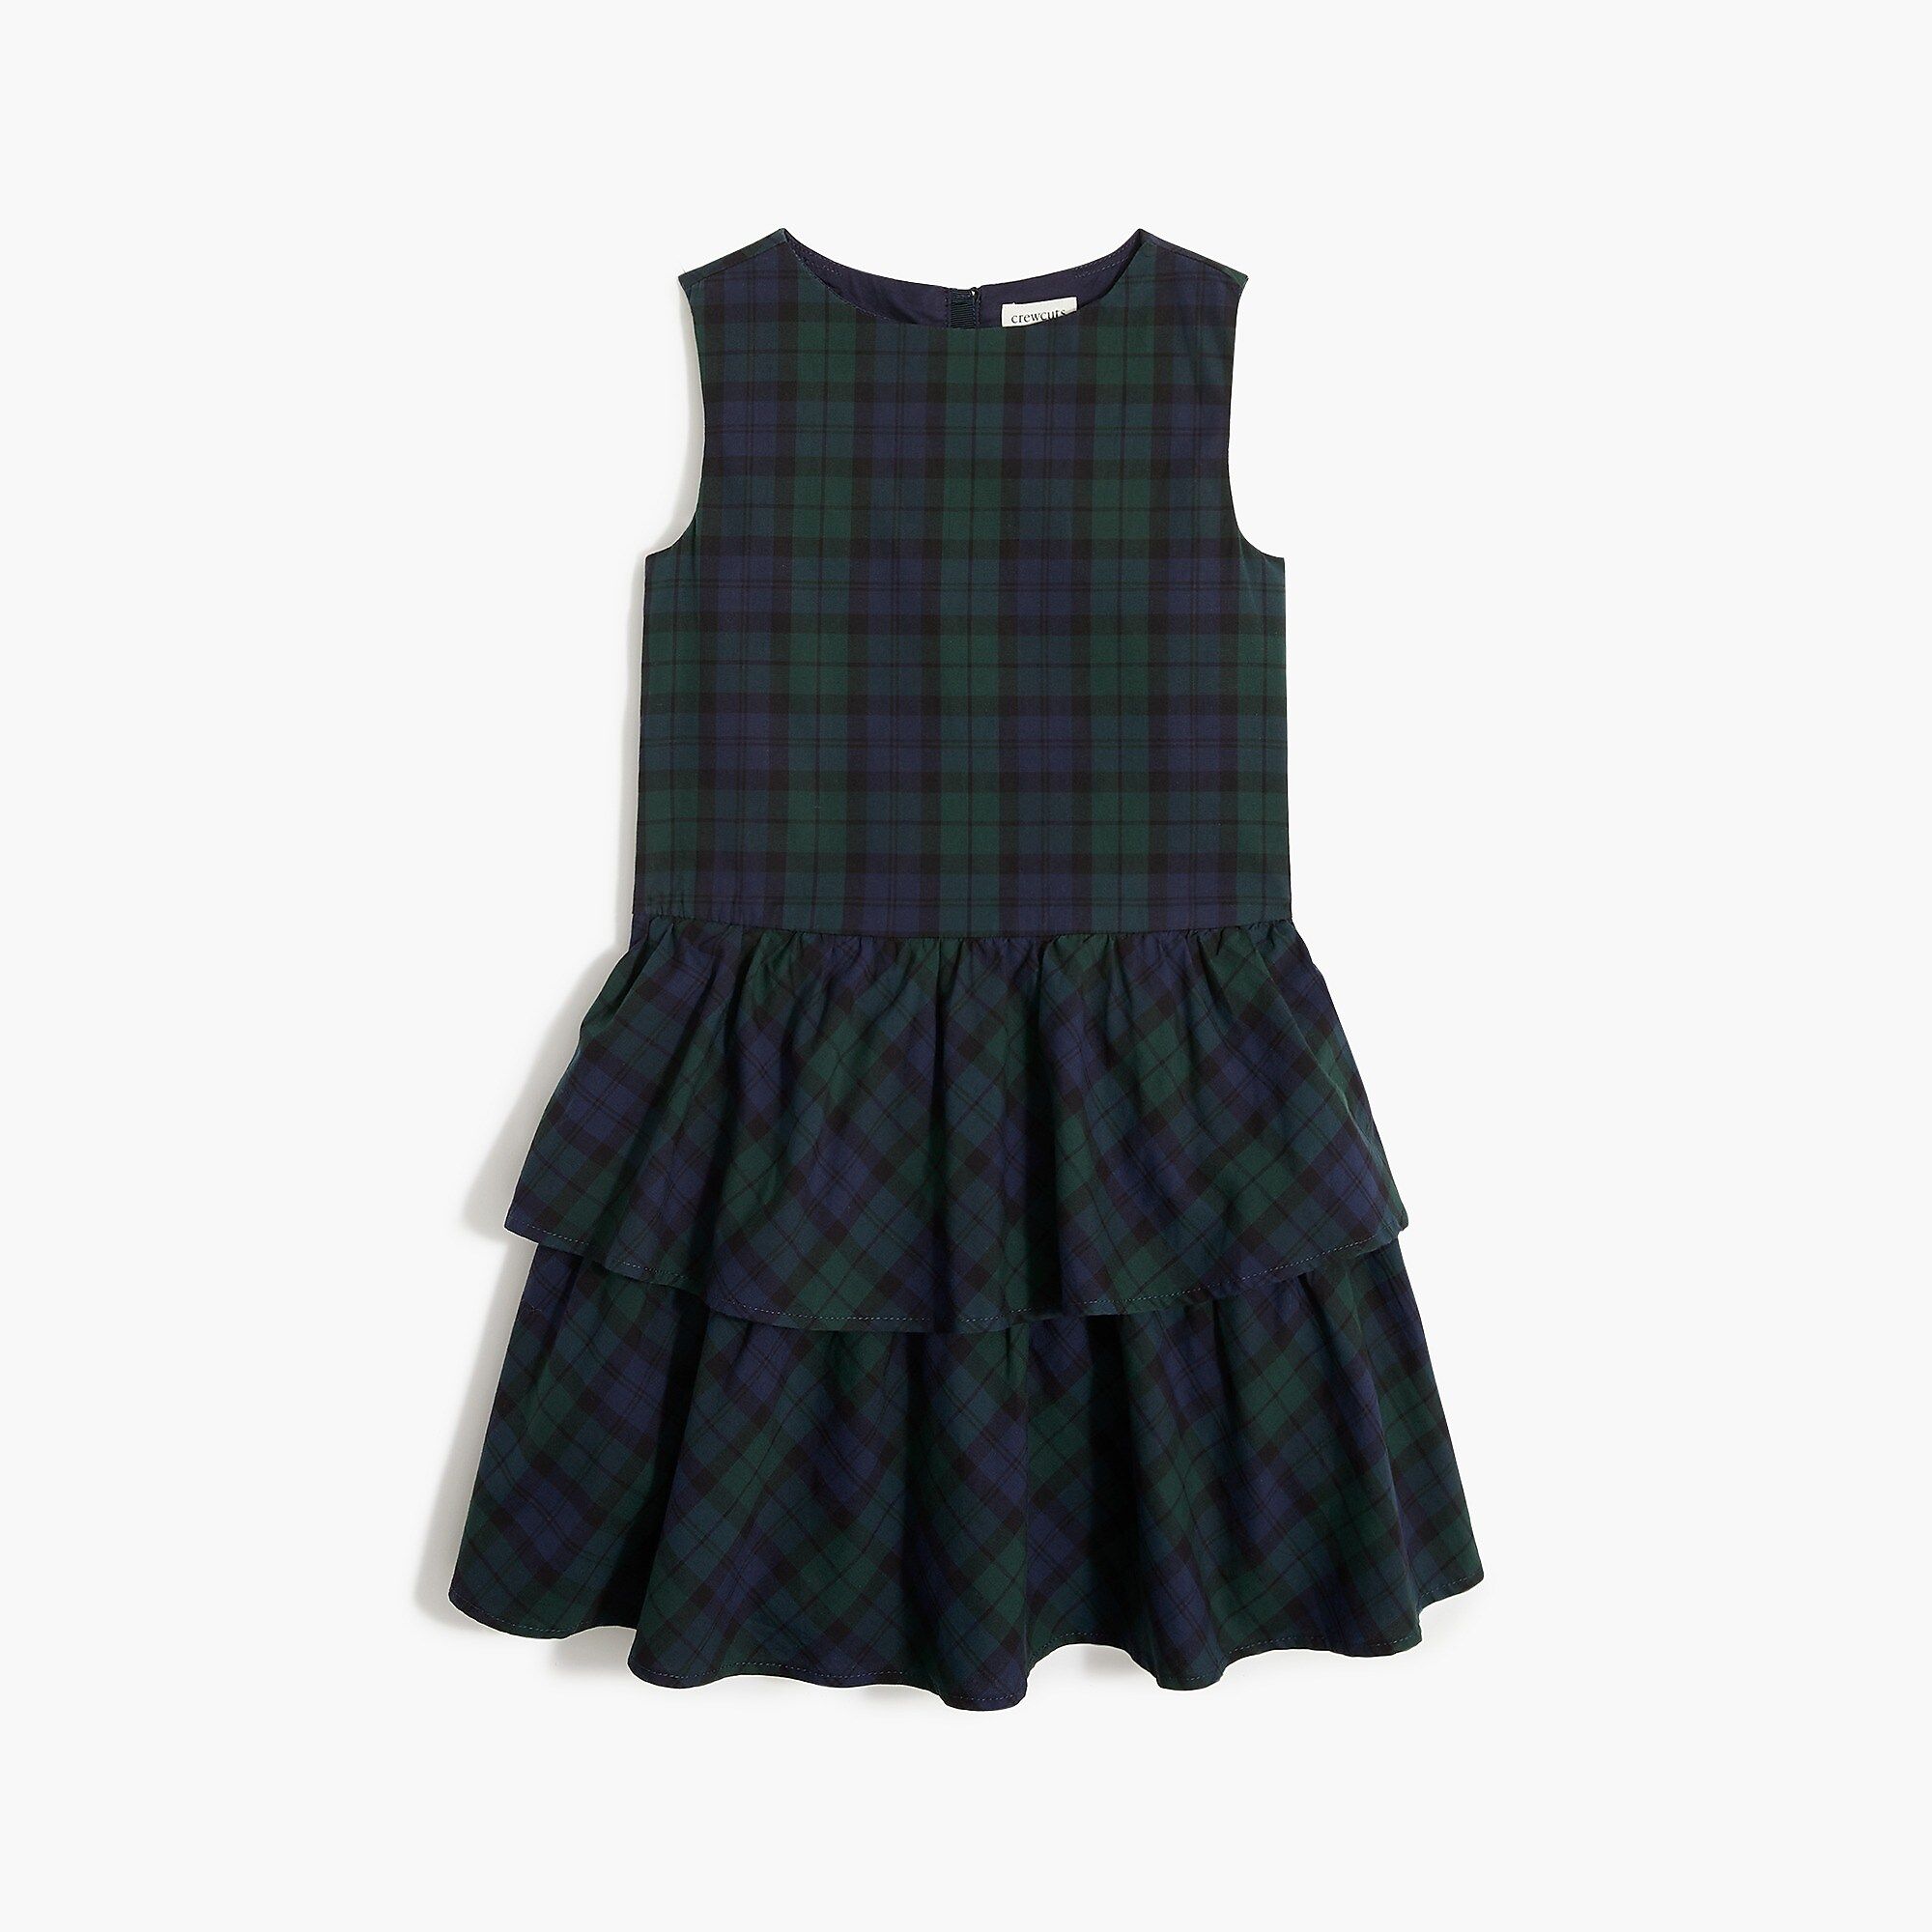 Girls' poplin Black Watch plaid dress | J.Crew Factory